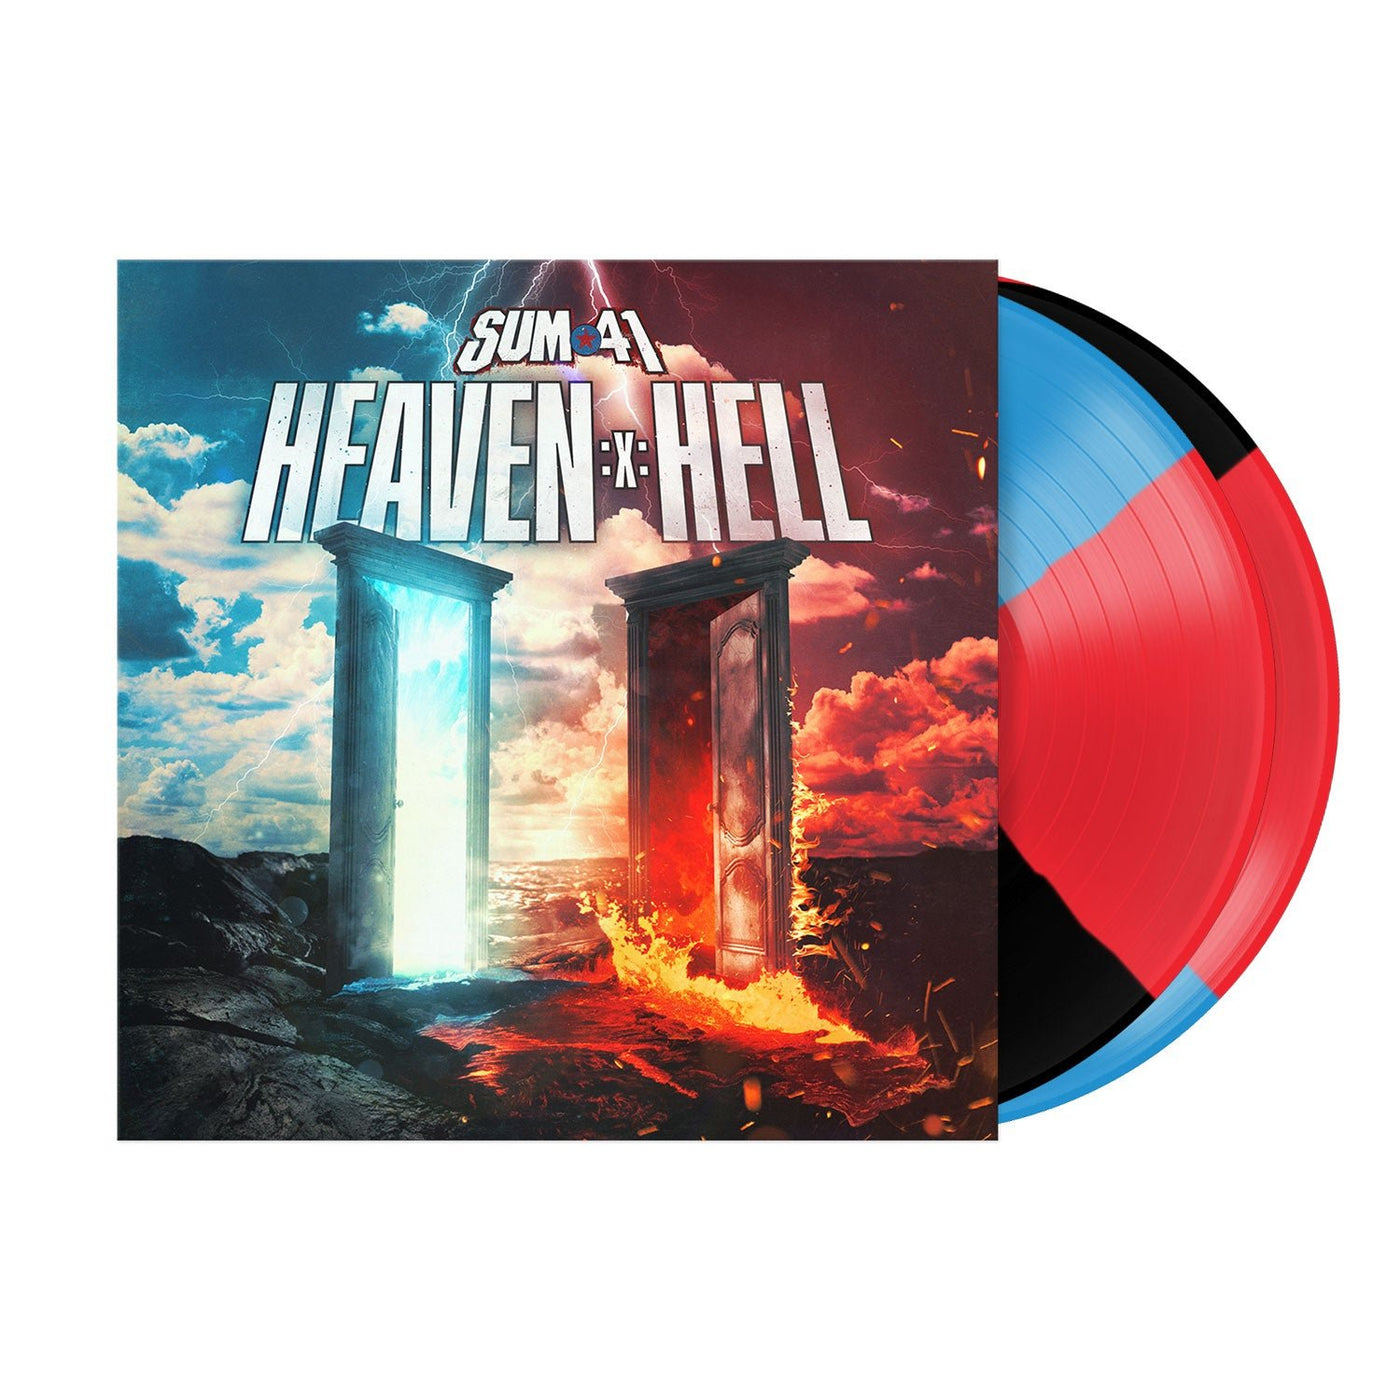 Heaven :x: Hell Blue/Red/Black Tri-Pie Double Vinyl LP